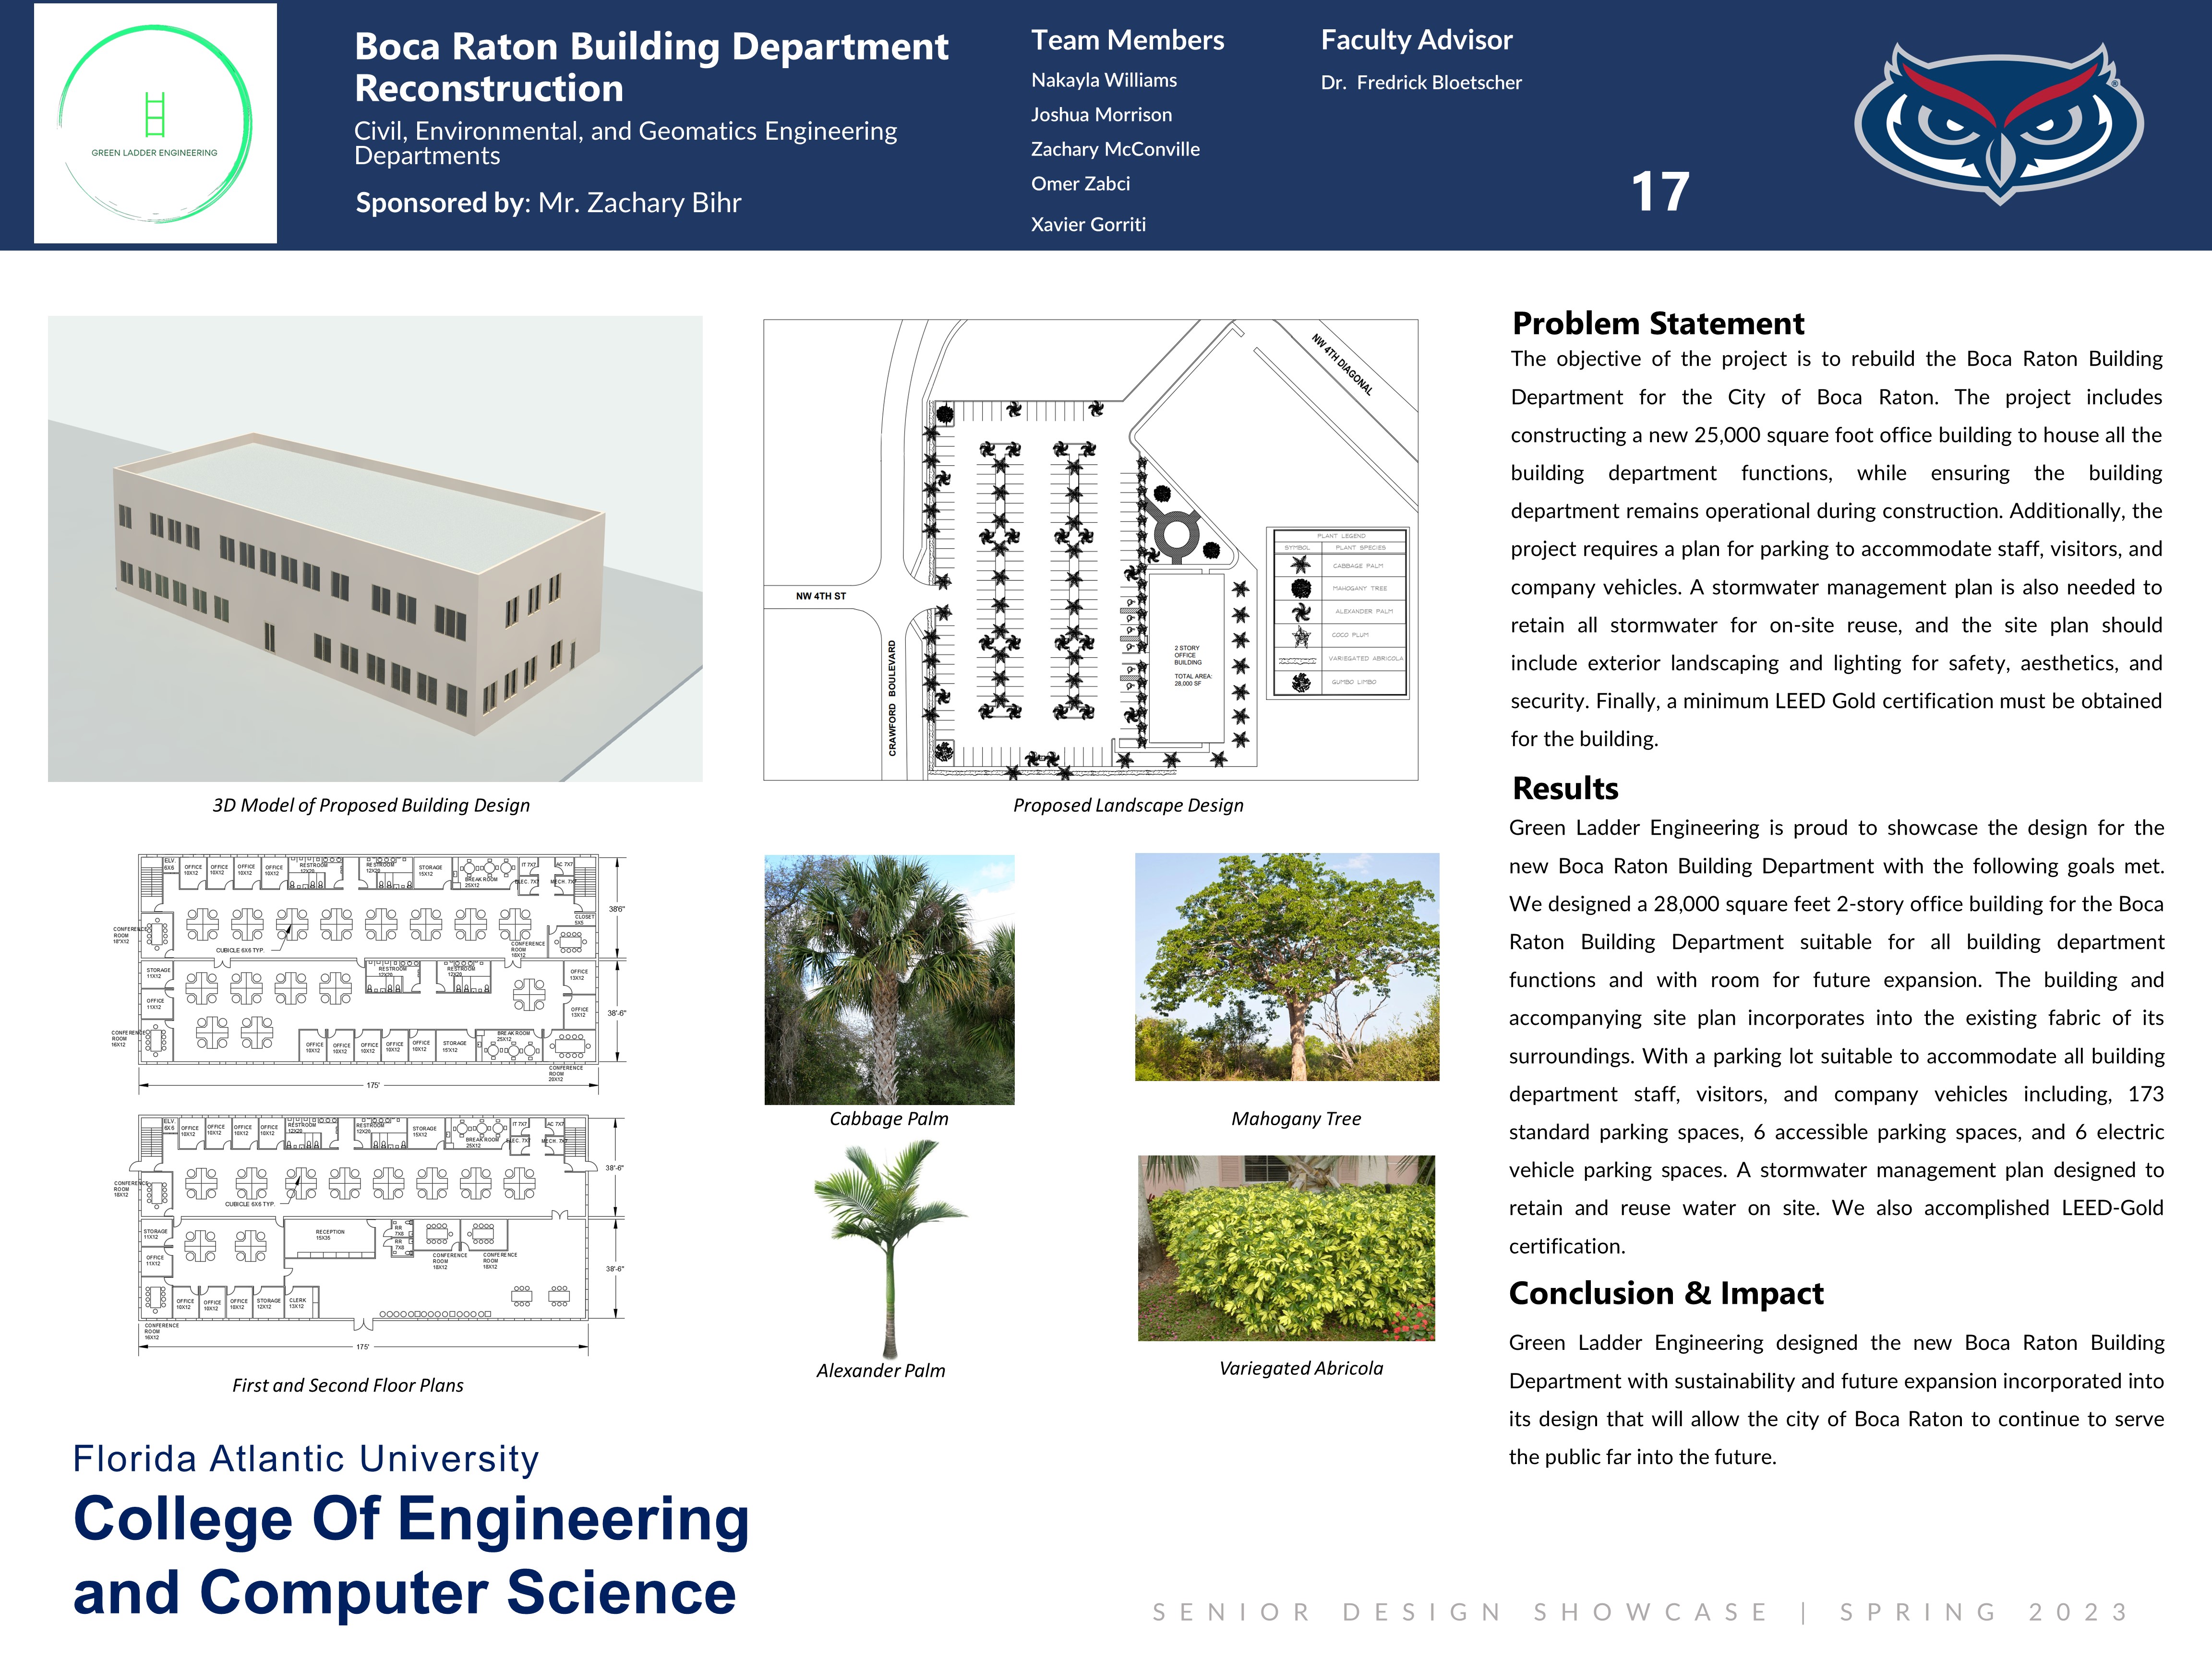 Boca Raton Building Department (Green Ladder)